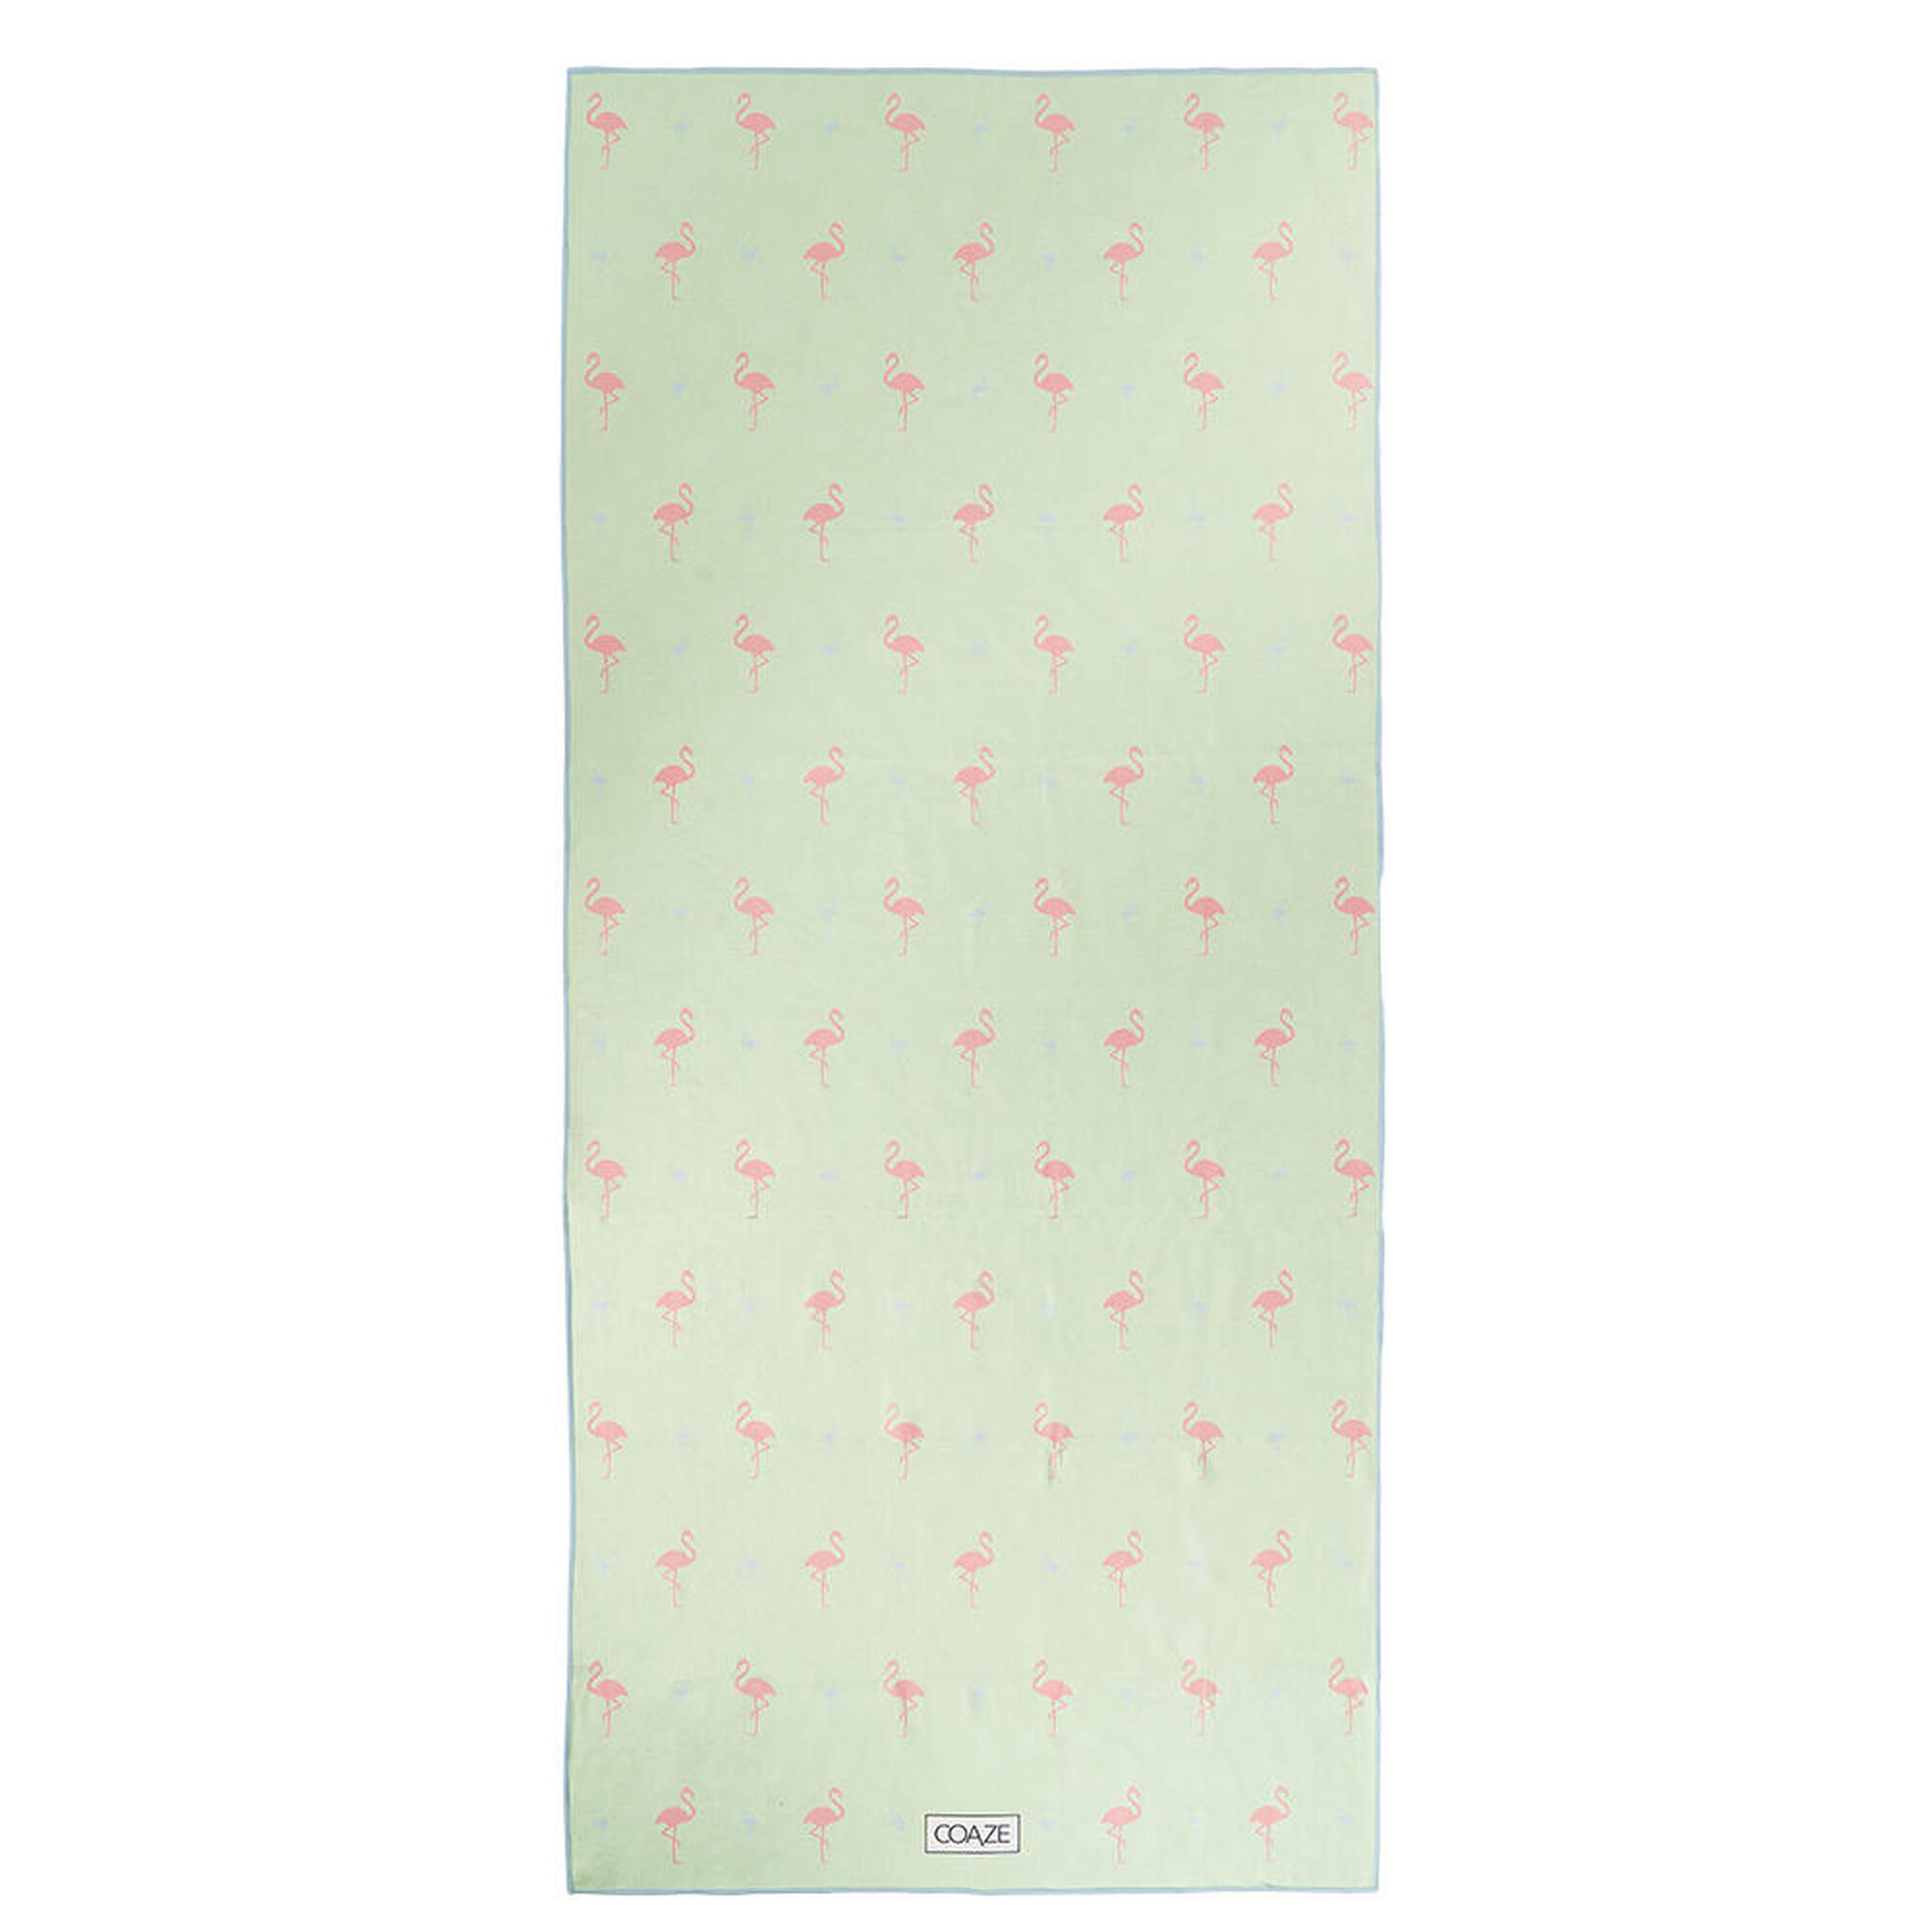 Unisex Sand Proof Sports Towel - The Wading Bird (Pink/Light Blue)